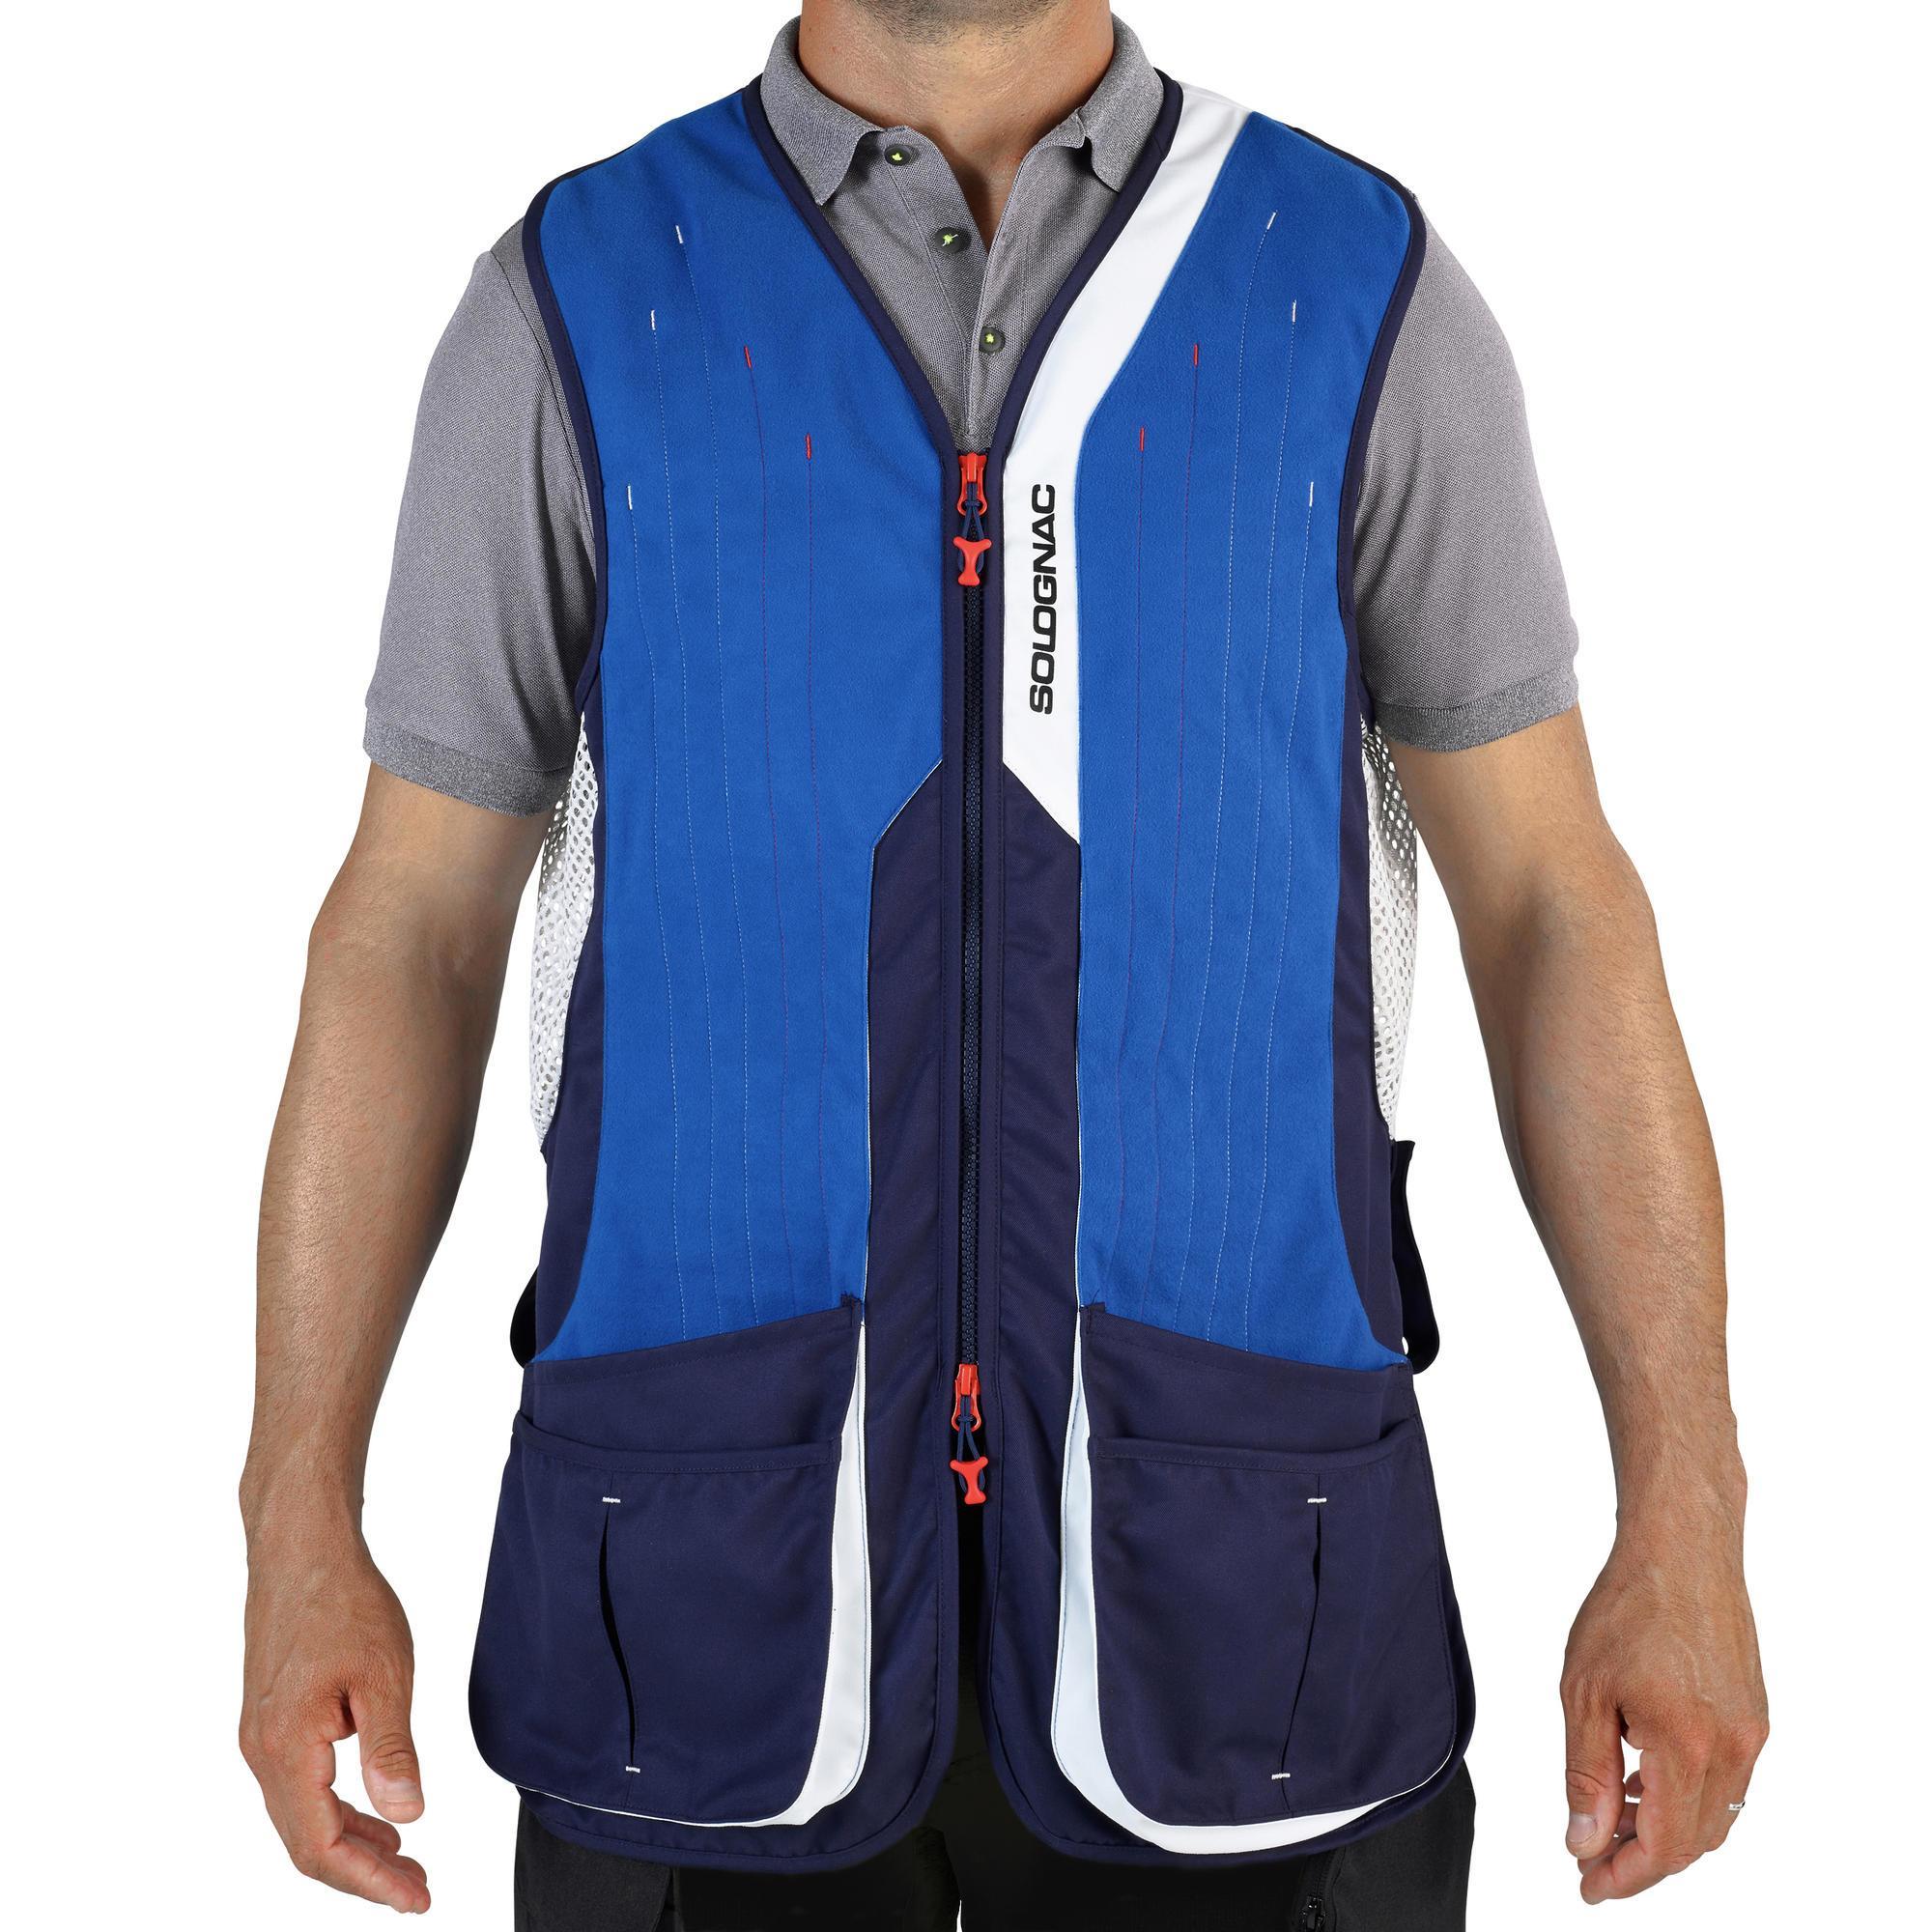 decathlon shooting vest